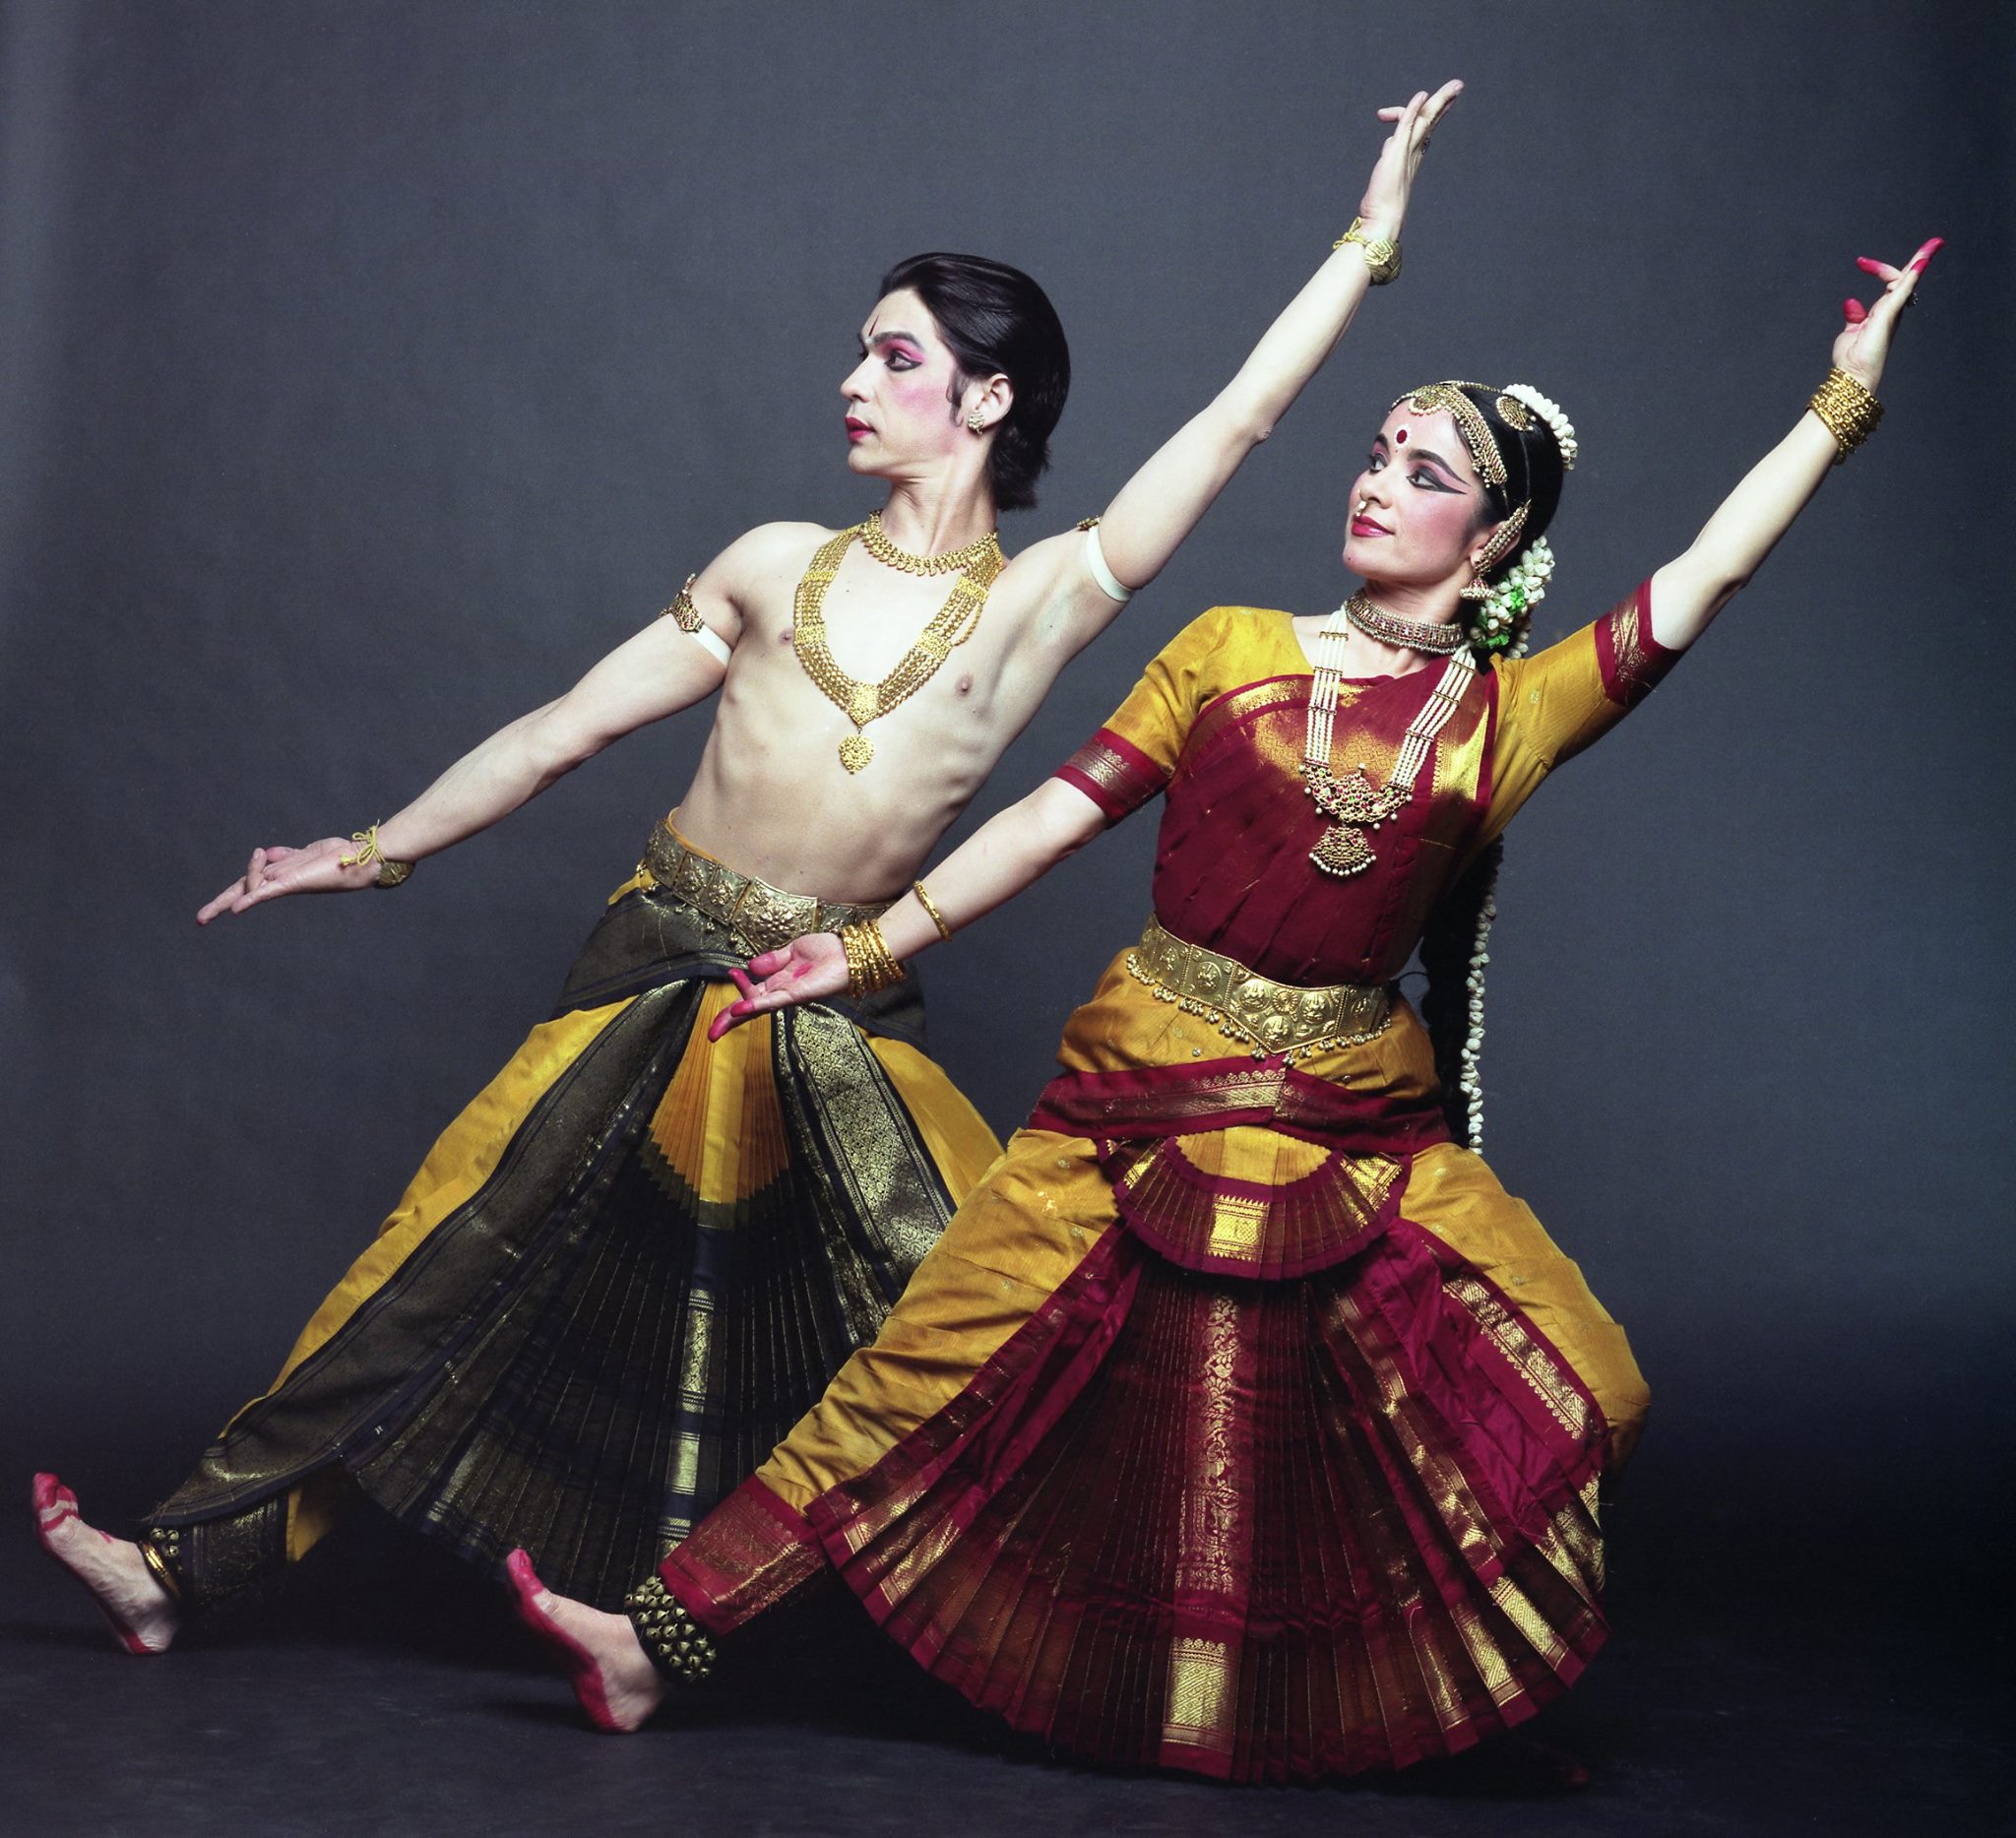 Karelian dance troupe celebrates the diversity of India Russia Beyond